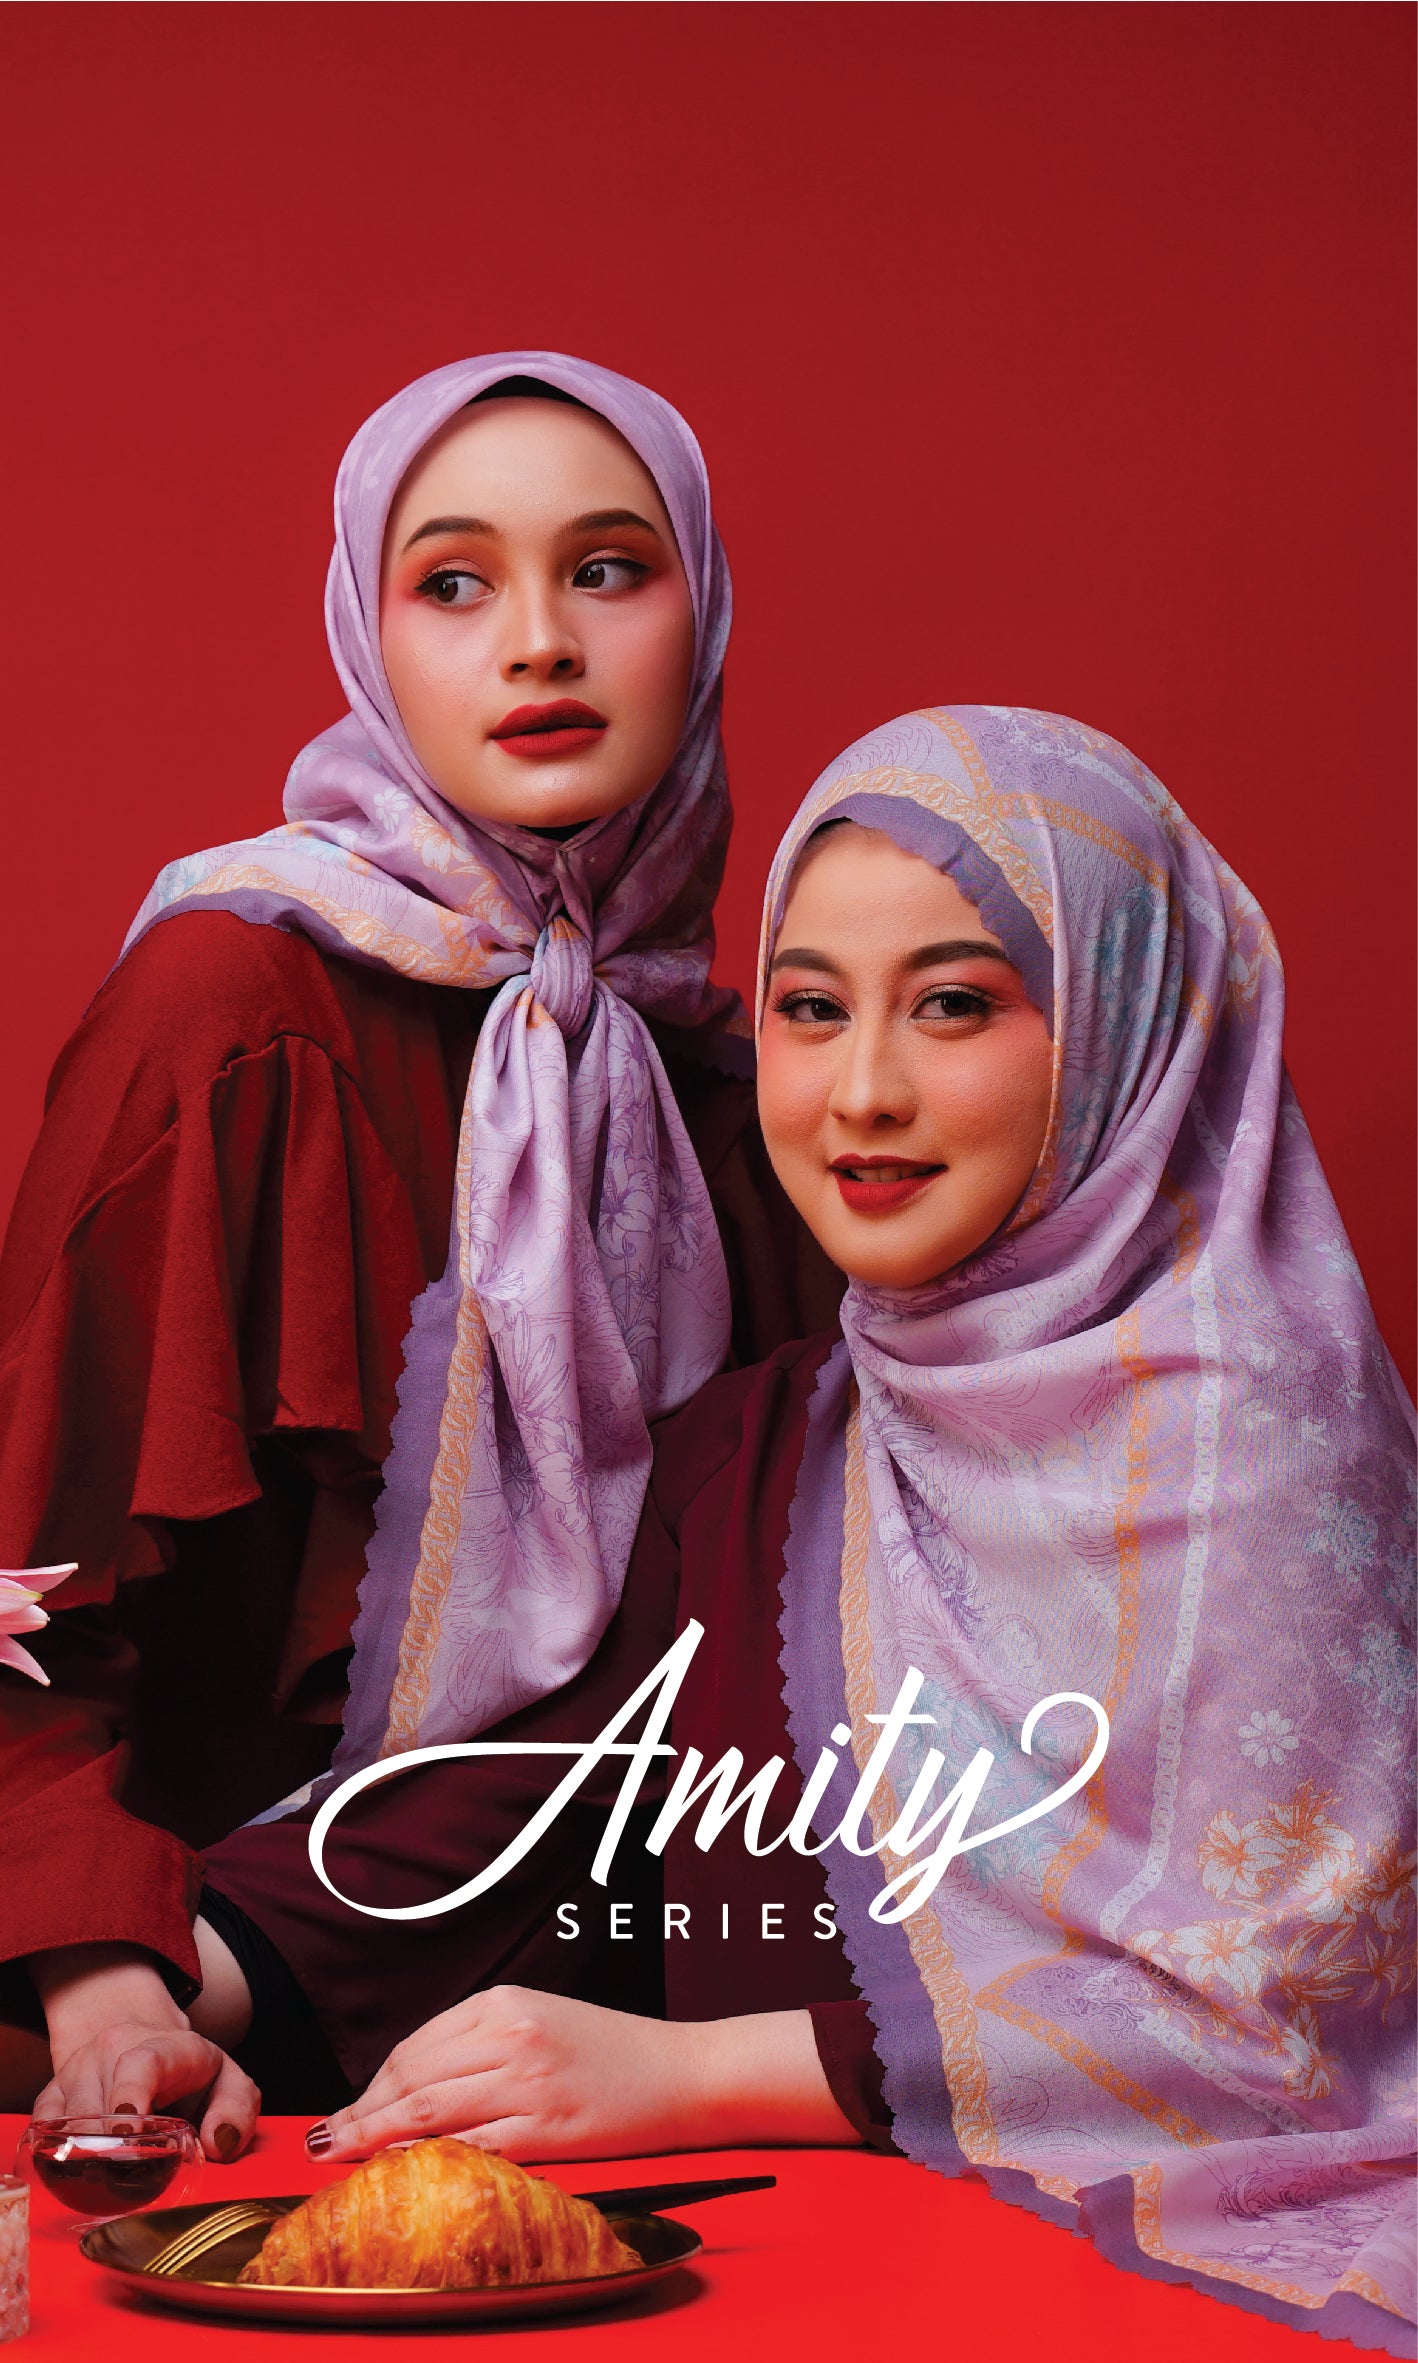 Amity Series